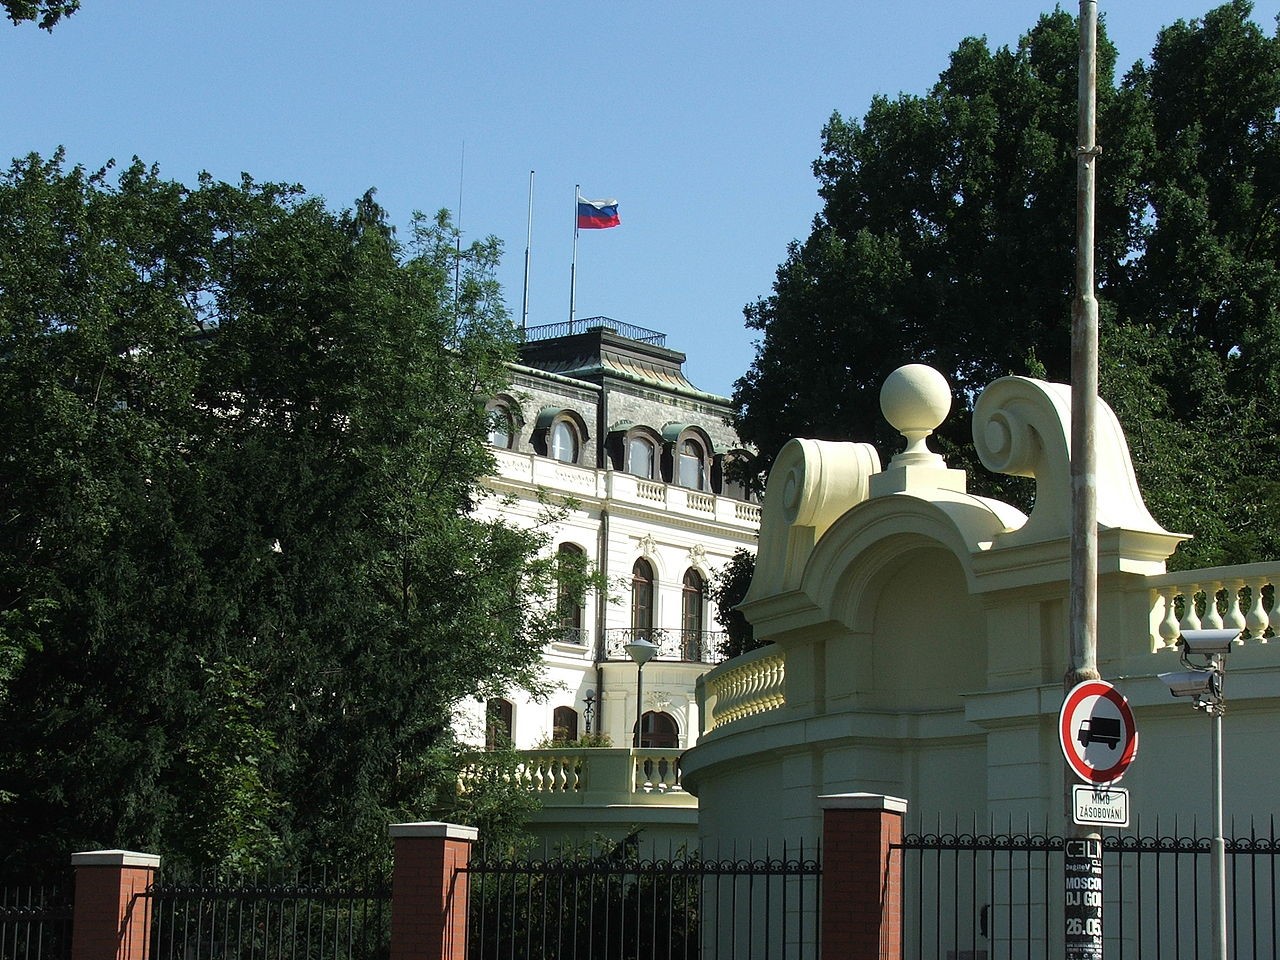 Czech Republic, Bulgaria, Ukraine: Russia’s GRU Had a Special Mission